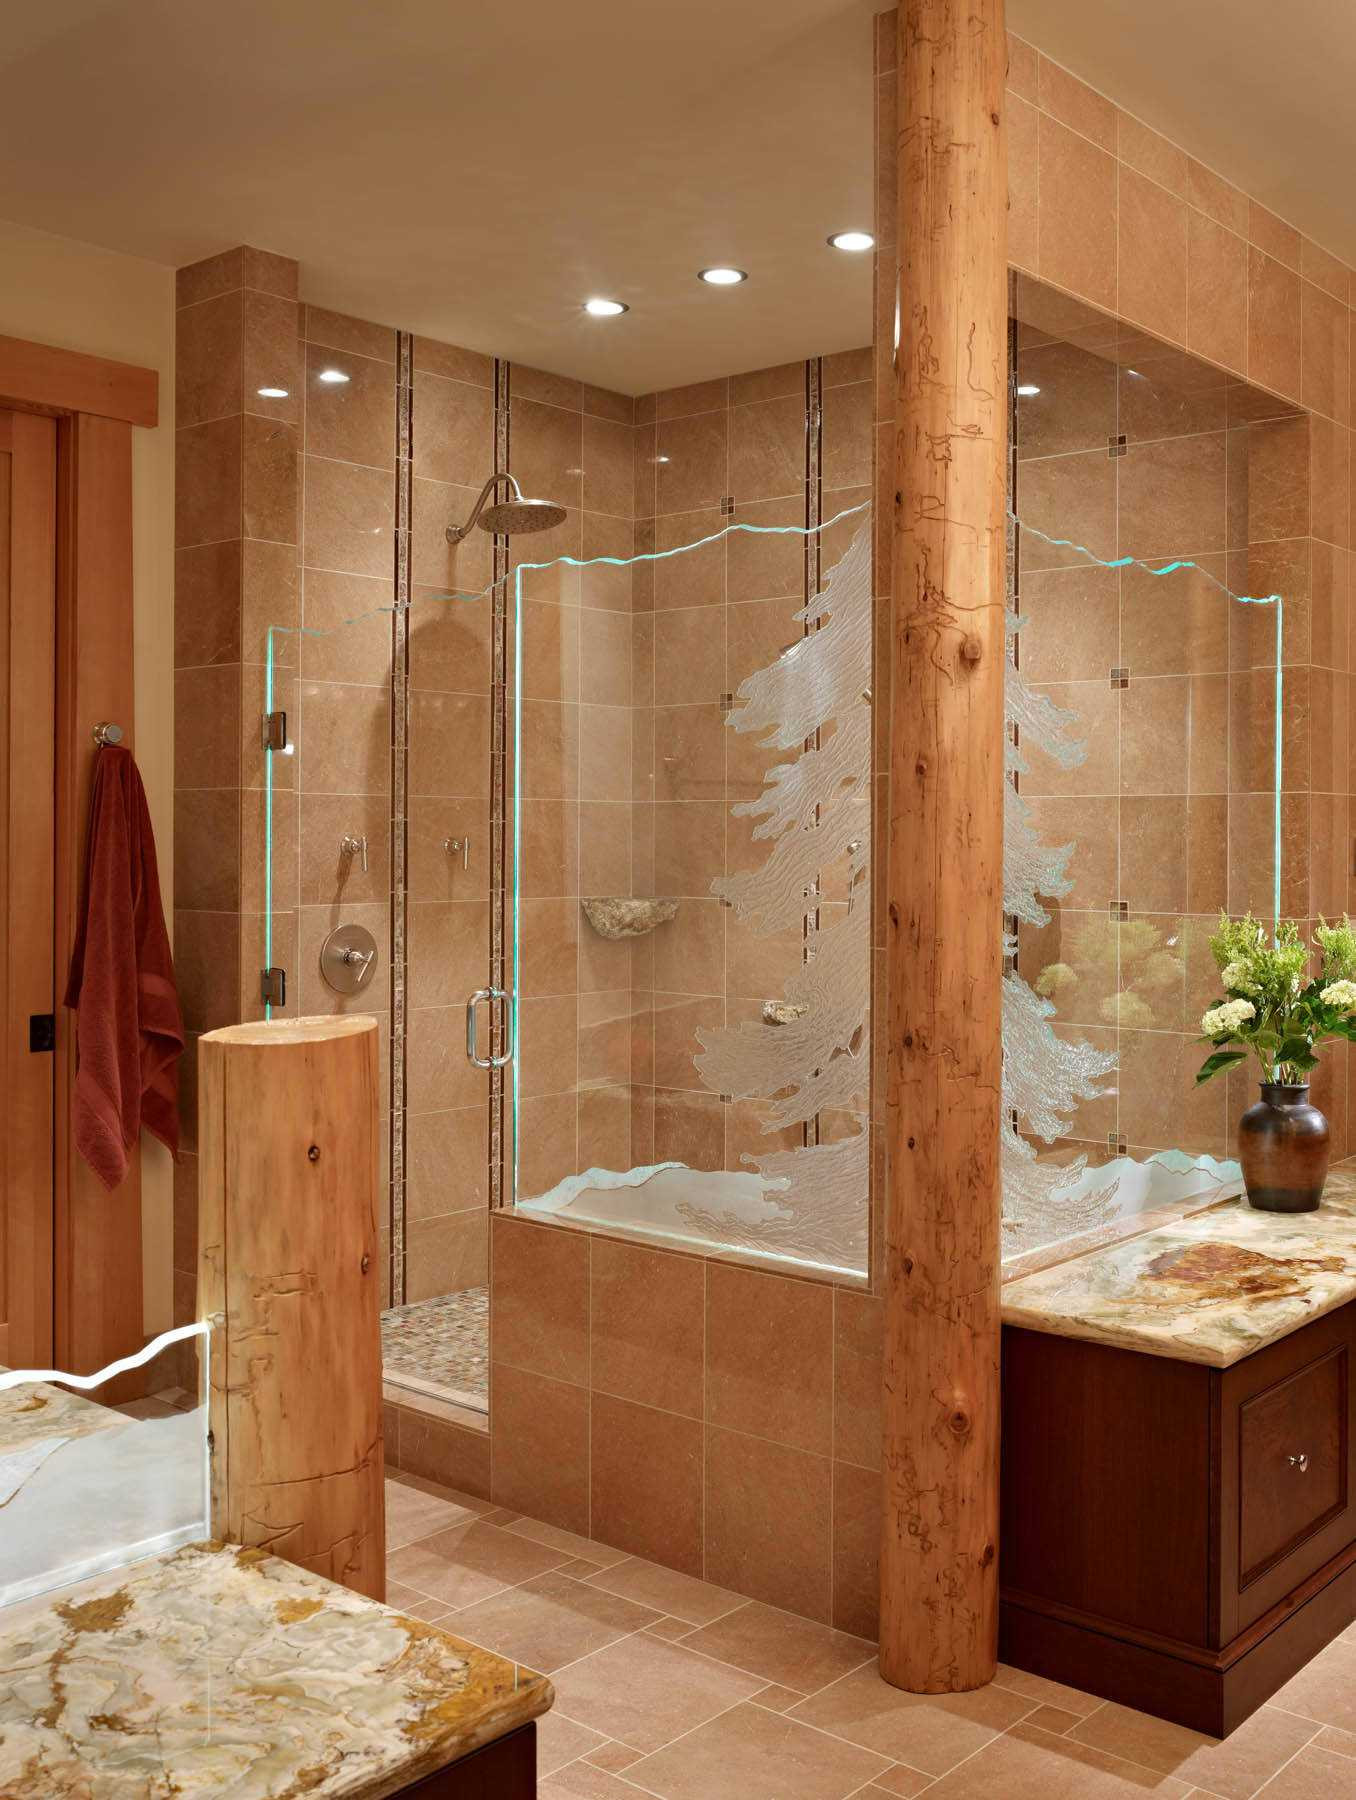 Rustic Bathroom Designs
 16 Fantastic Rustic Bathroom Designs That Will Take Your